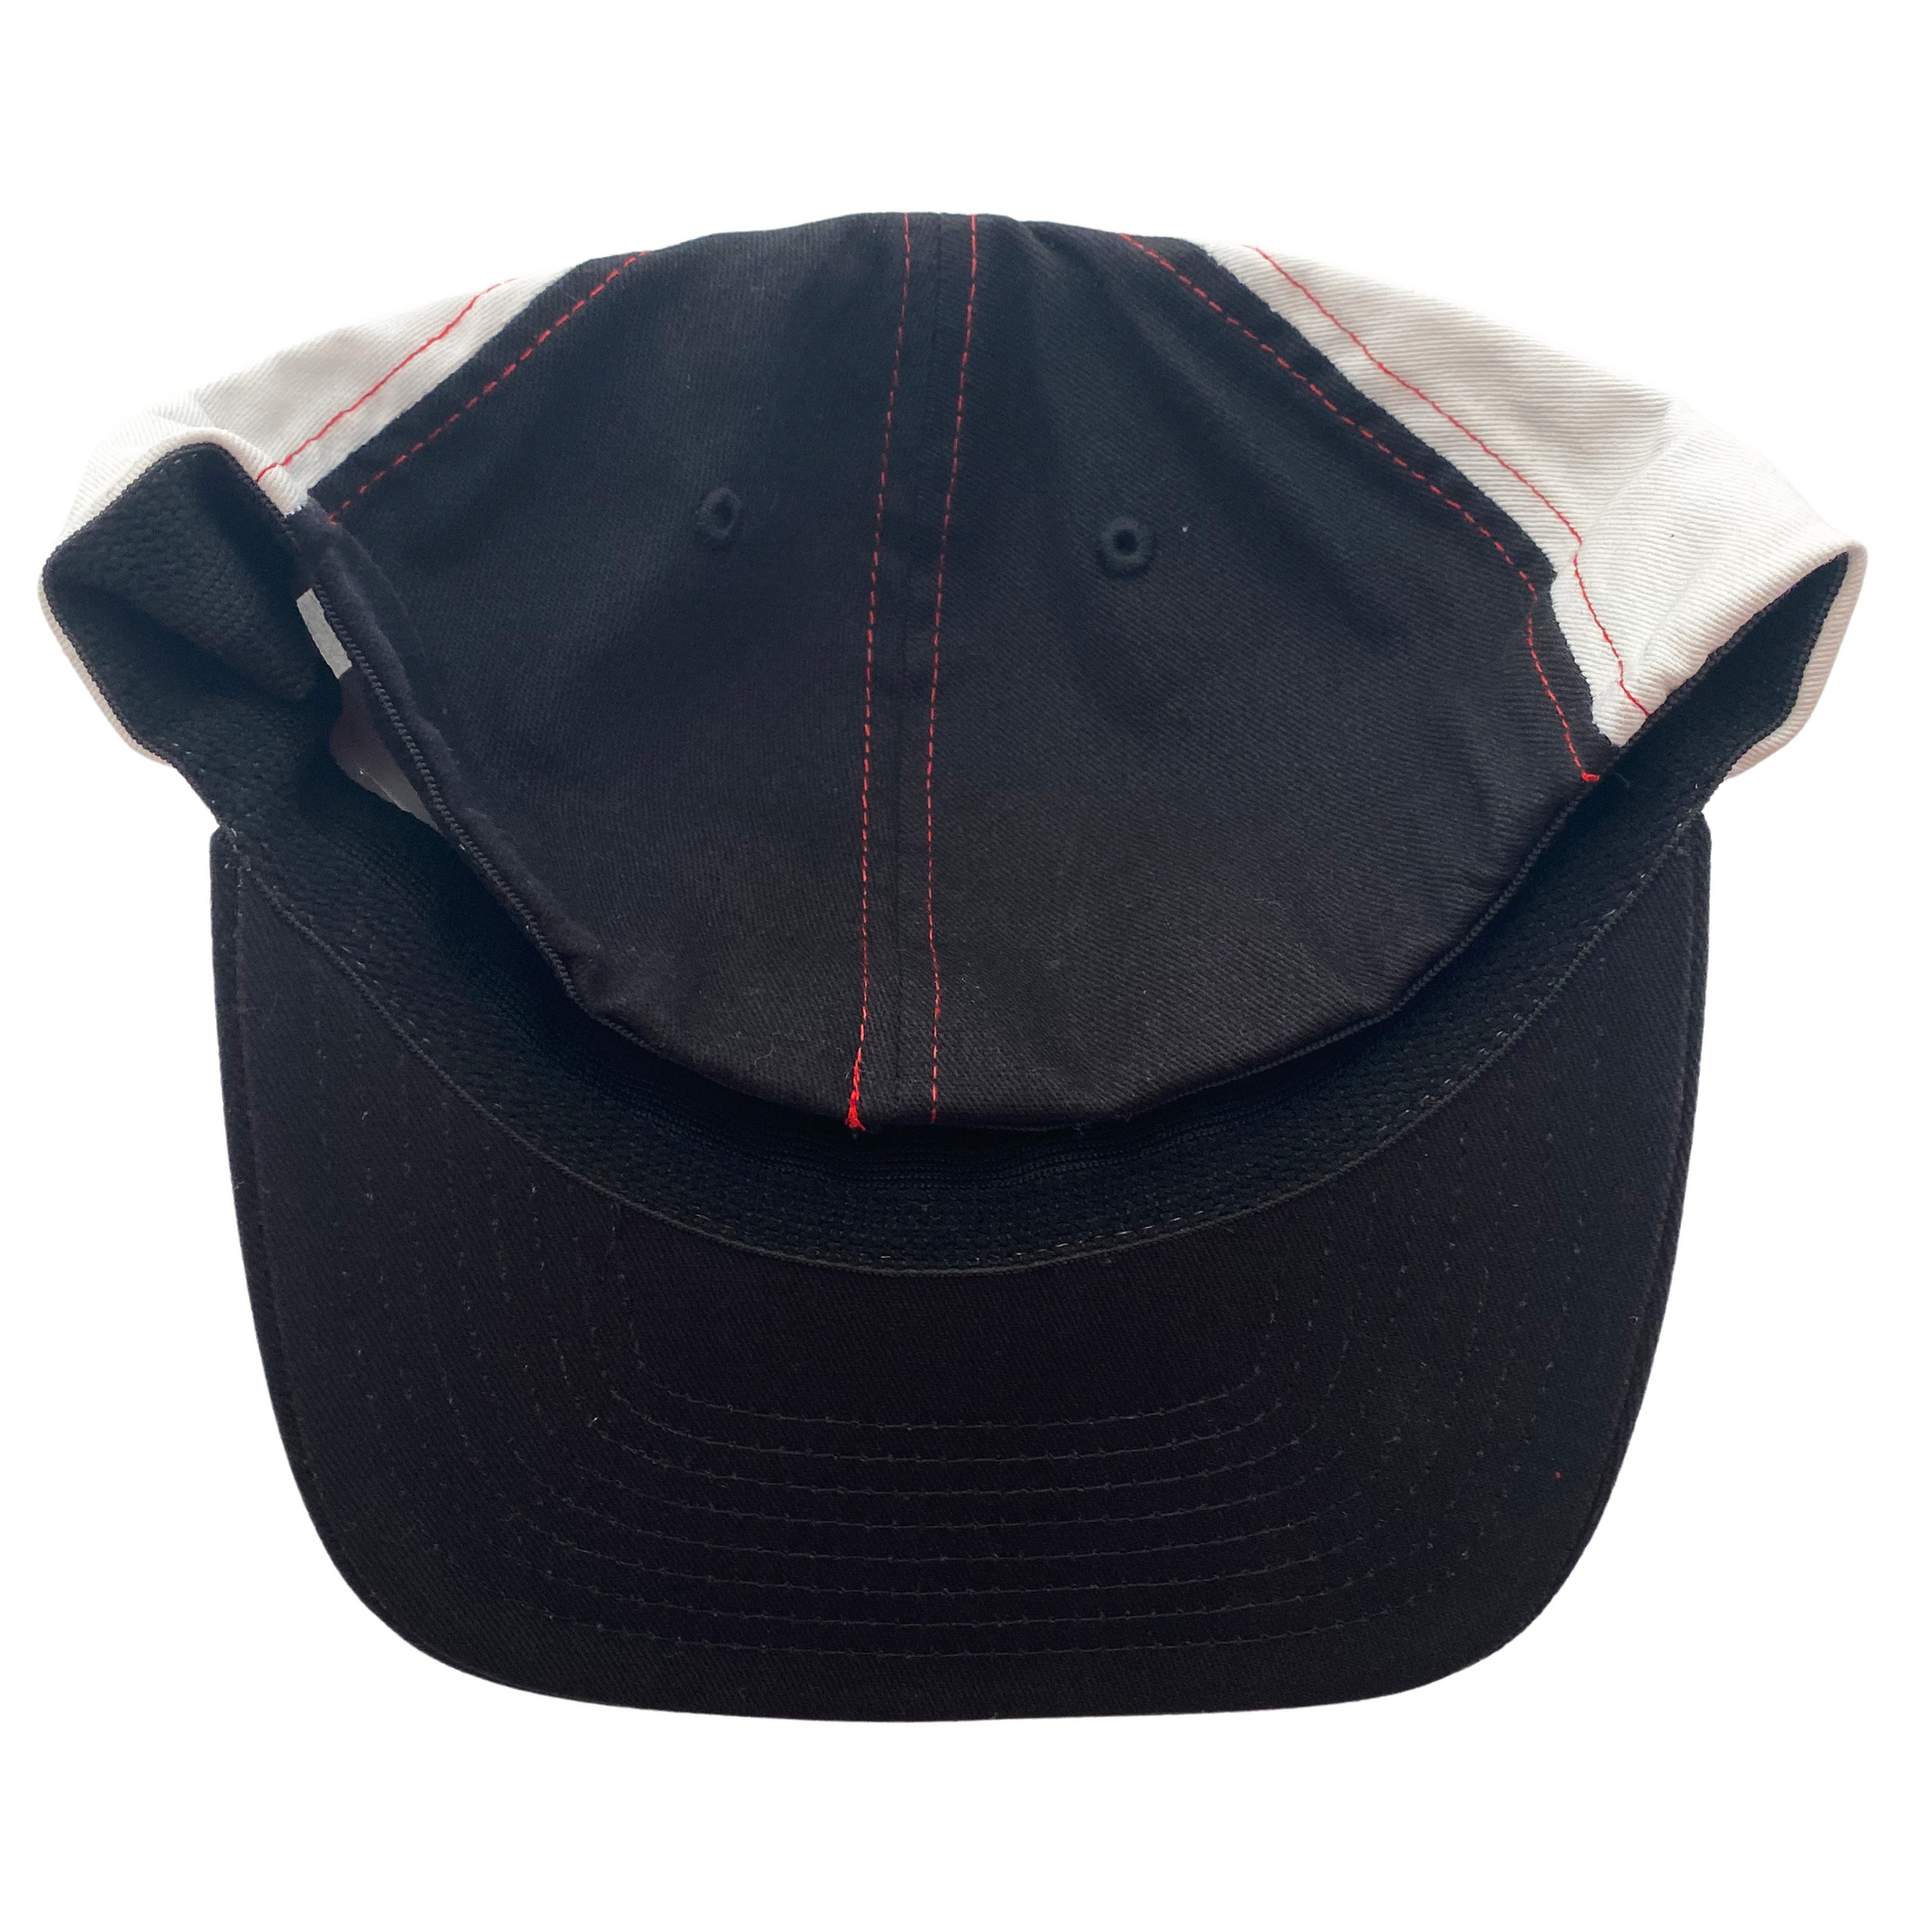 HAT CLUB on X: We've got a few of the Portland Mavericks hats